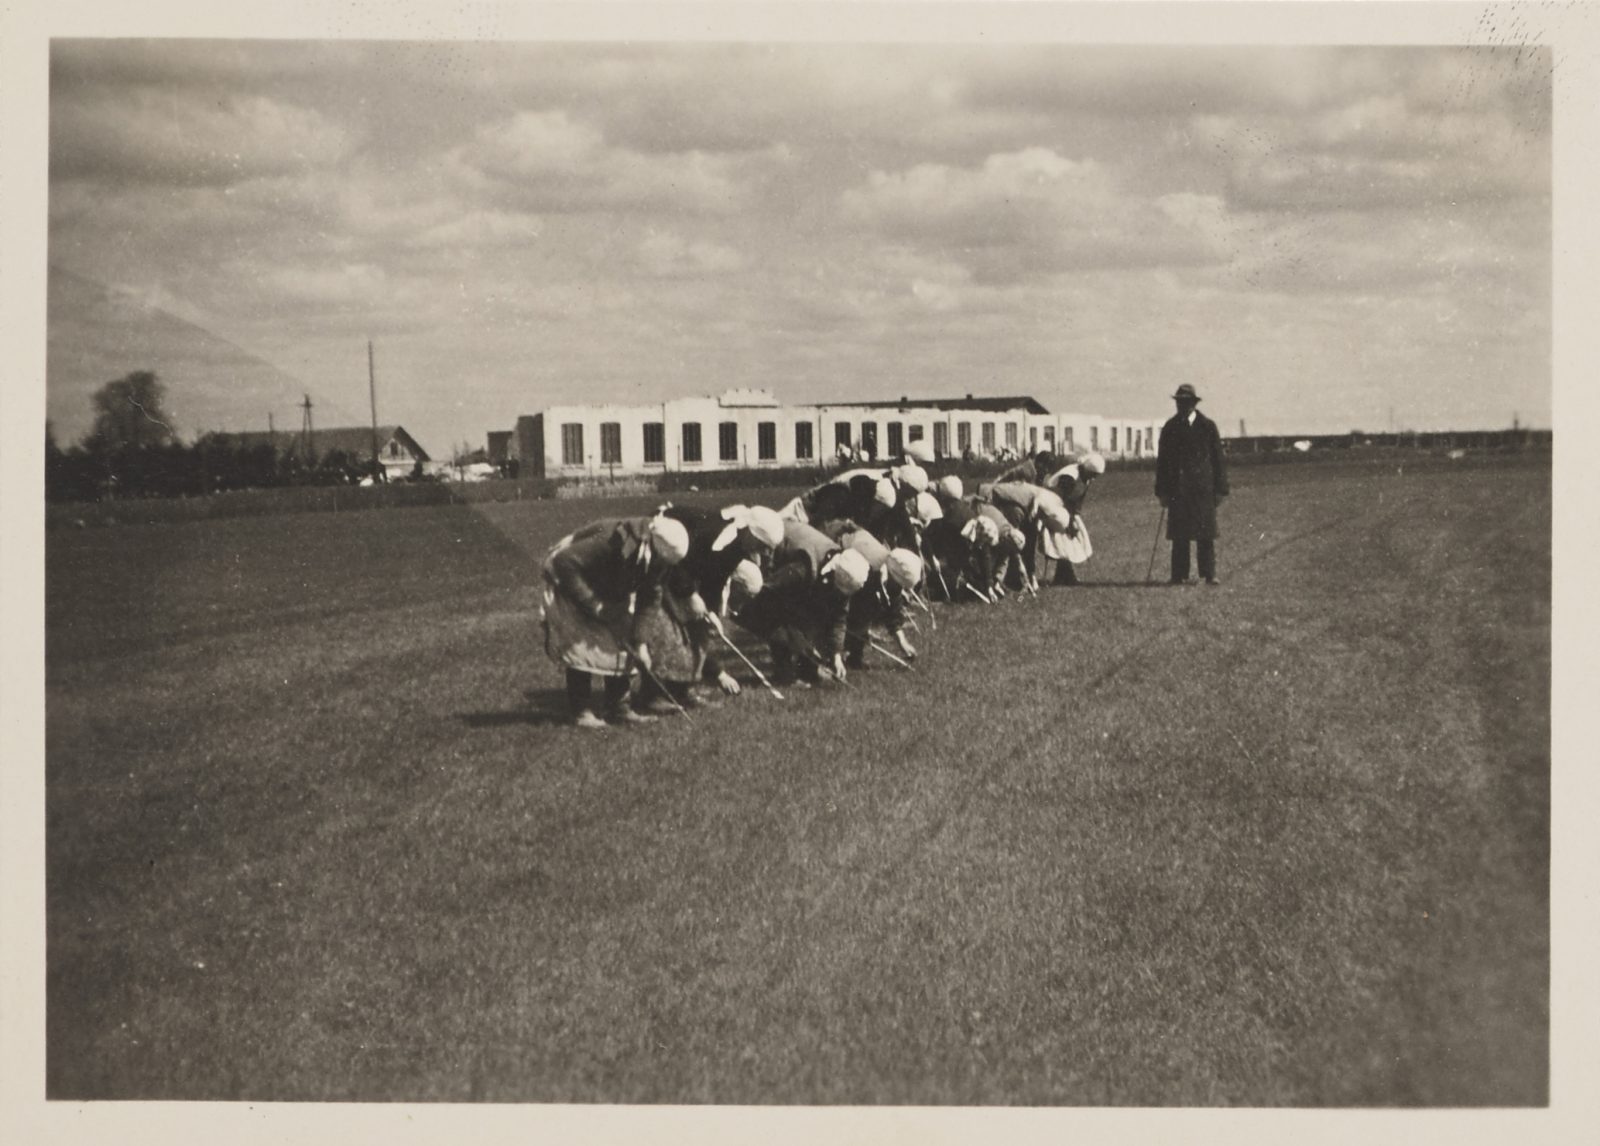 Photo album showing the construction of the horse racing track in Służewiec, photo Tadeusz Giżycki, 1936–1939 Polish Horse Racing Club in Warsaw, item no. 5279, catalogue no. X/47